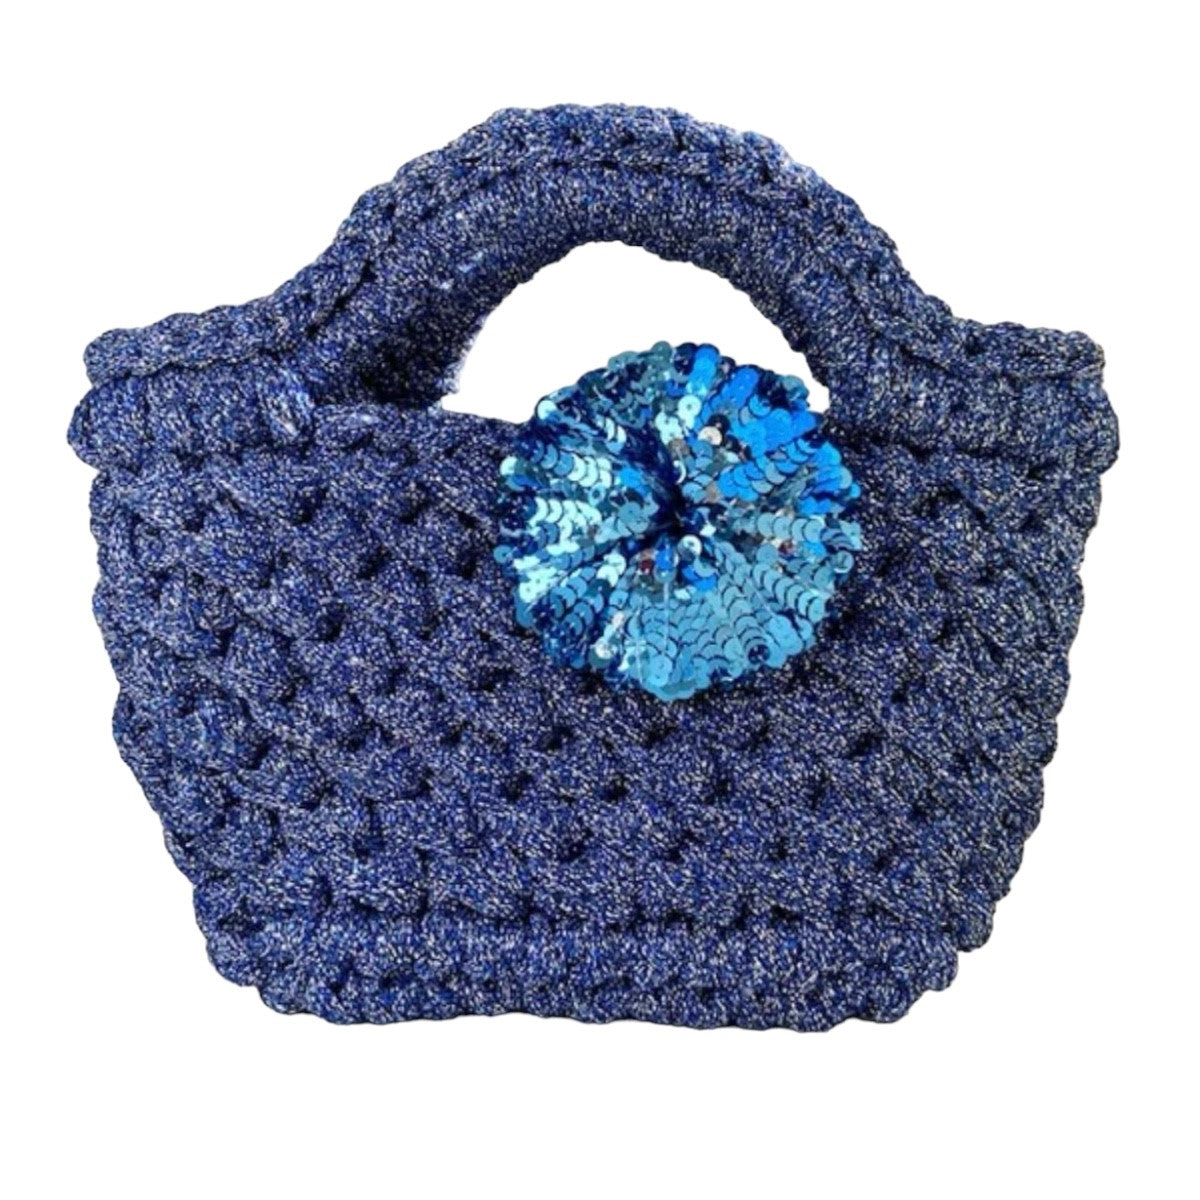 Bebe Mini Basket with Embellishment Tote Bag